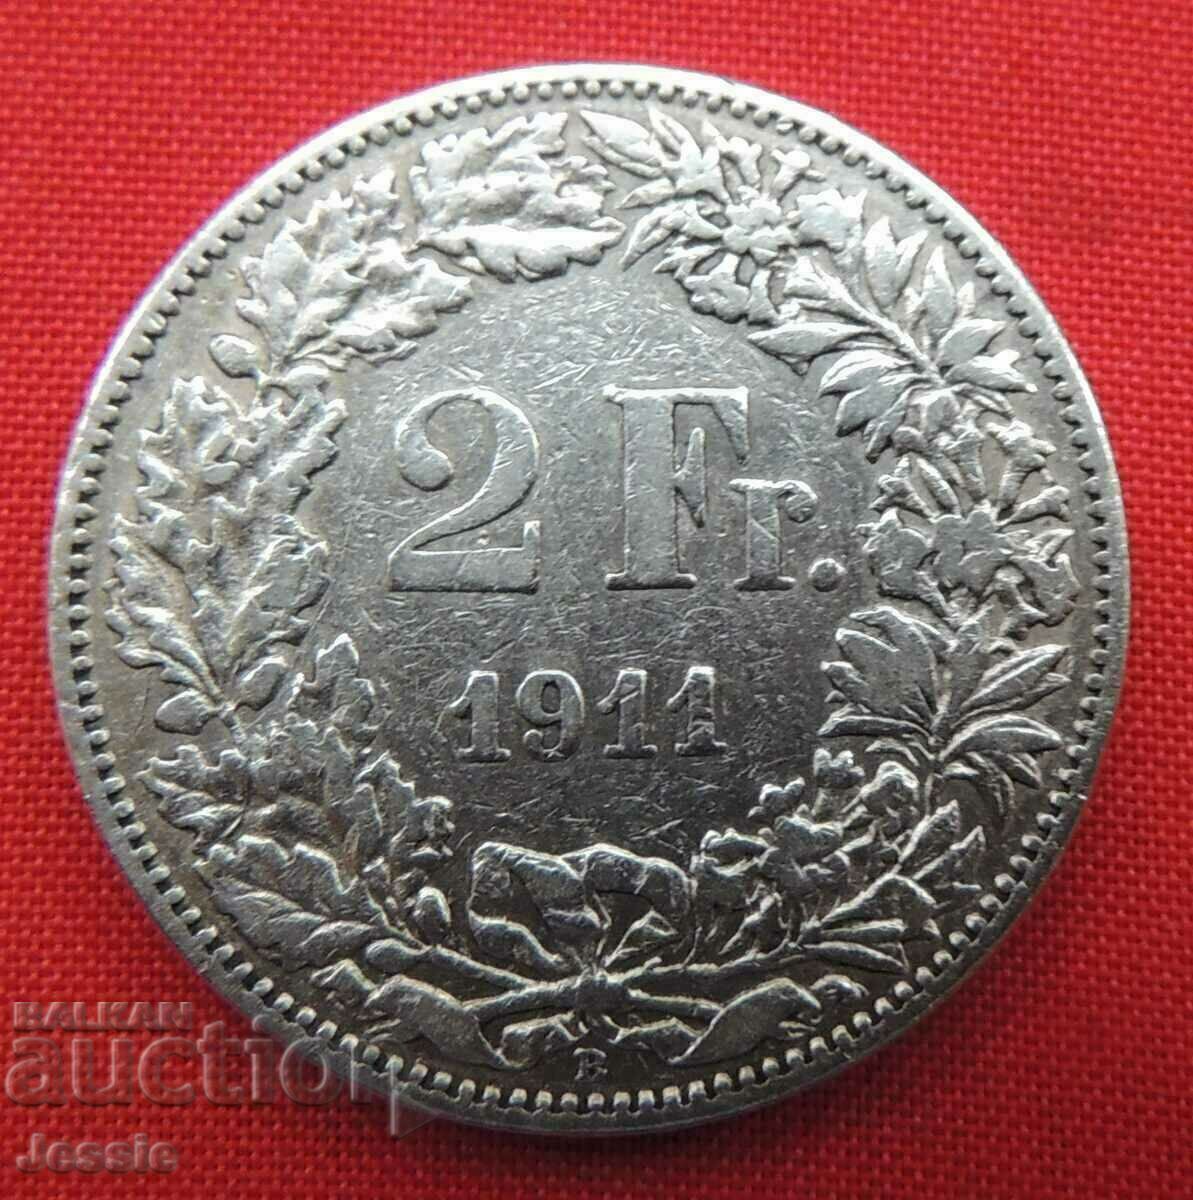 2 Francs 1911 B Switzerland Silver